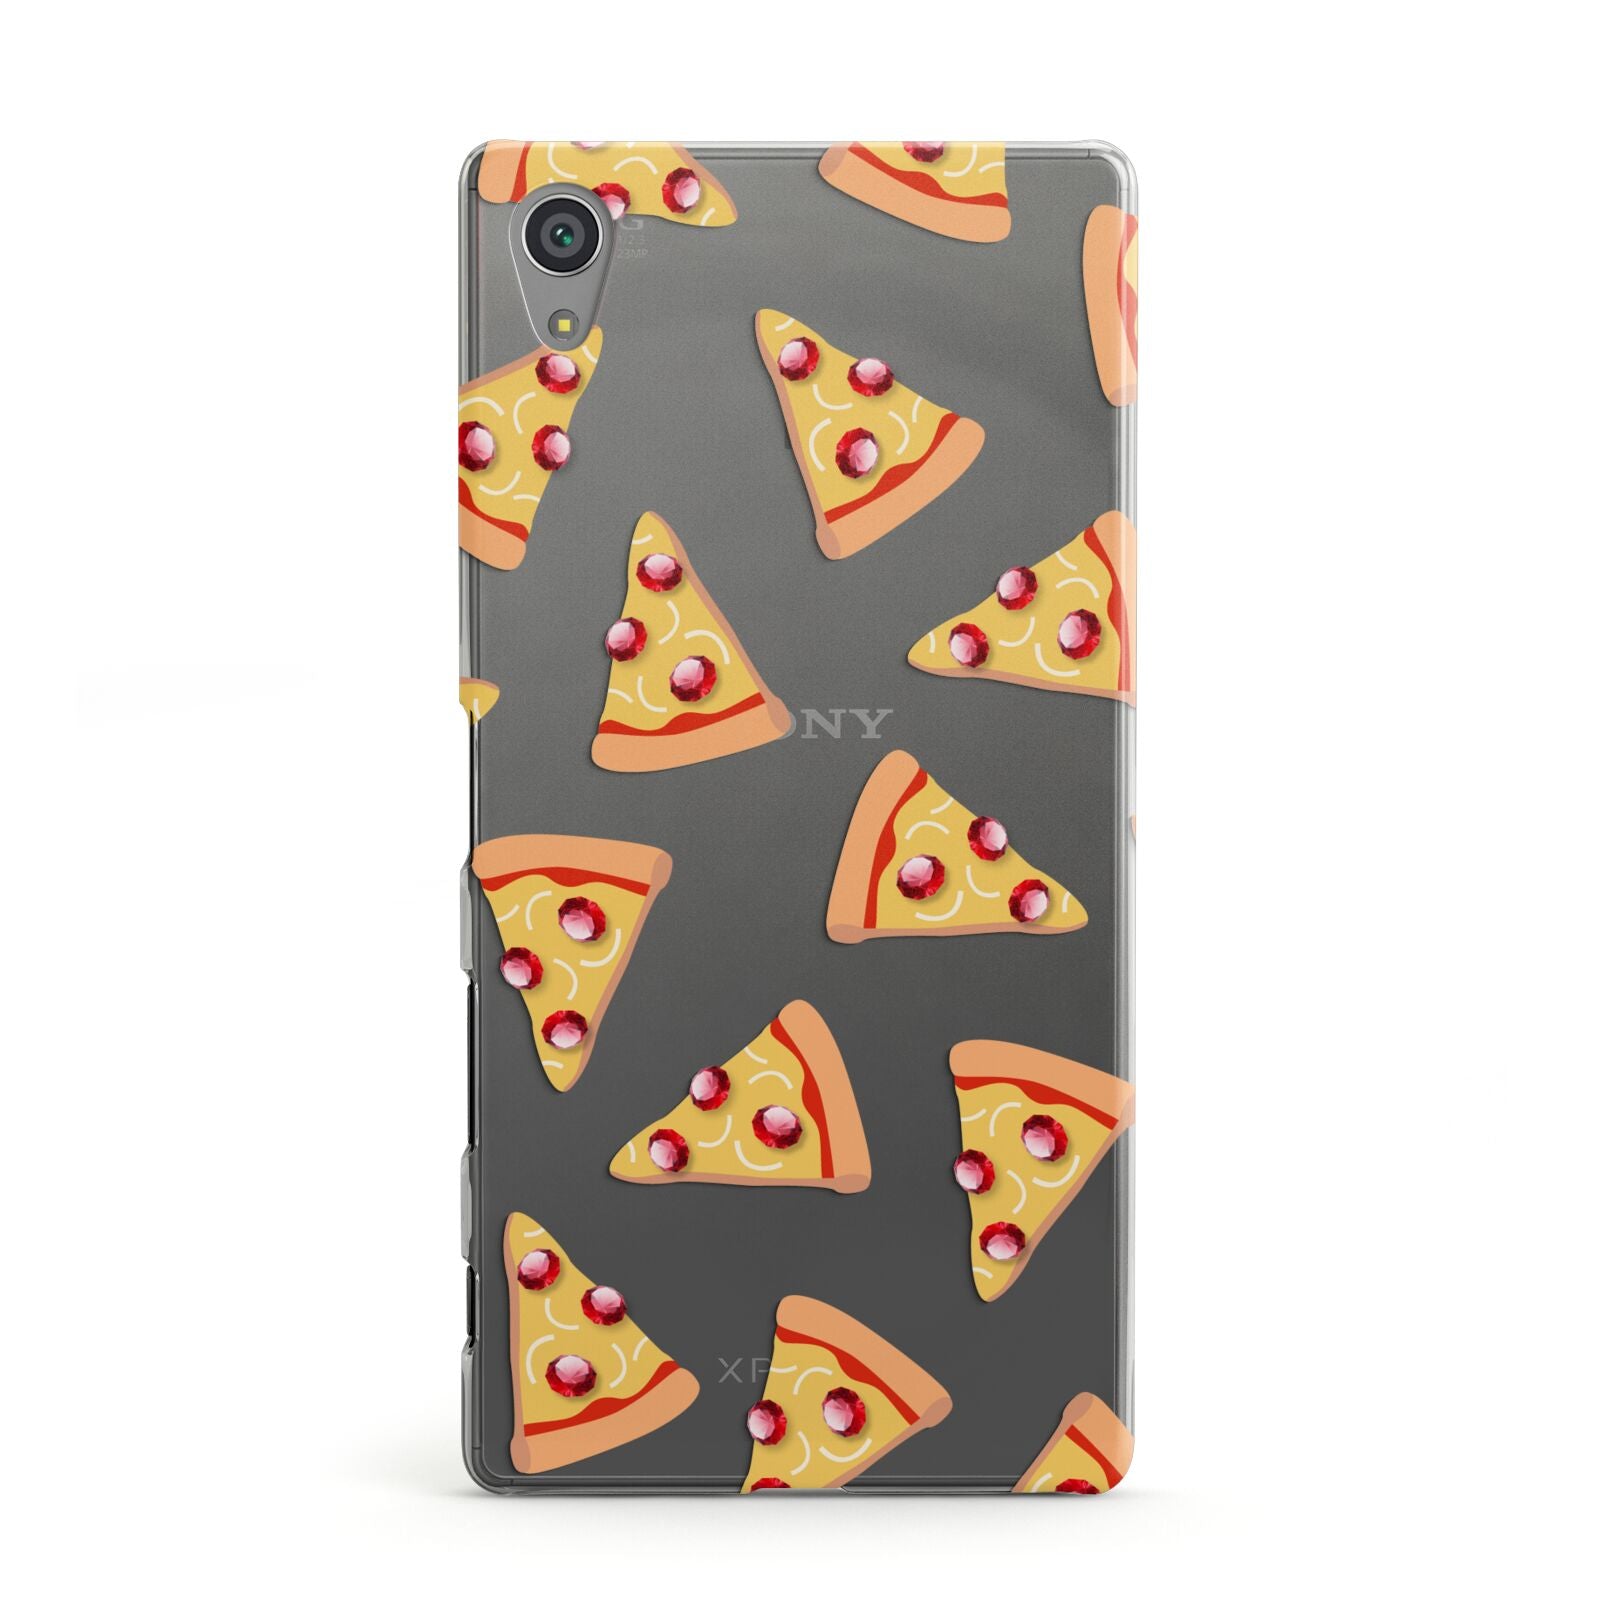 Rubies on Cartoon Pizza Slices Sony Xperia Case